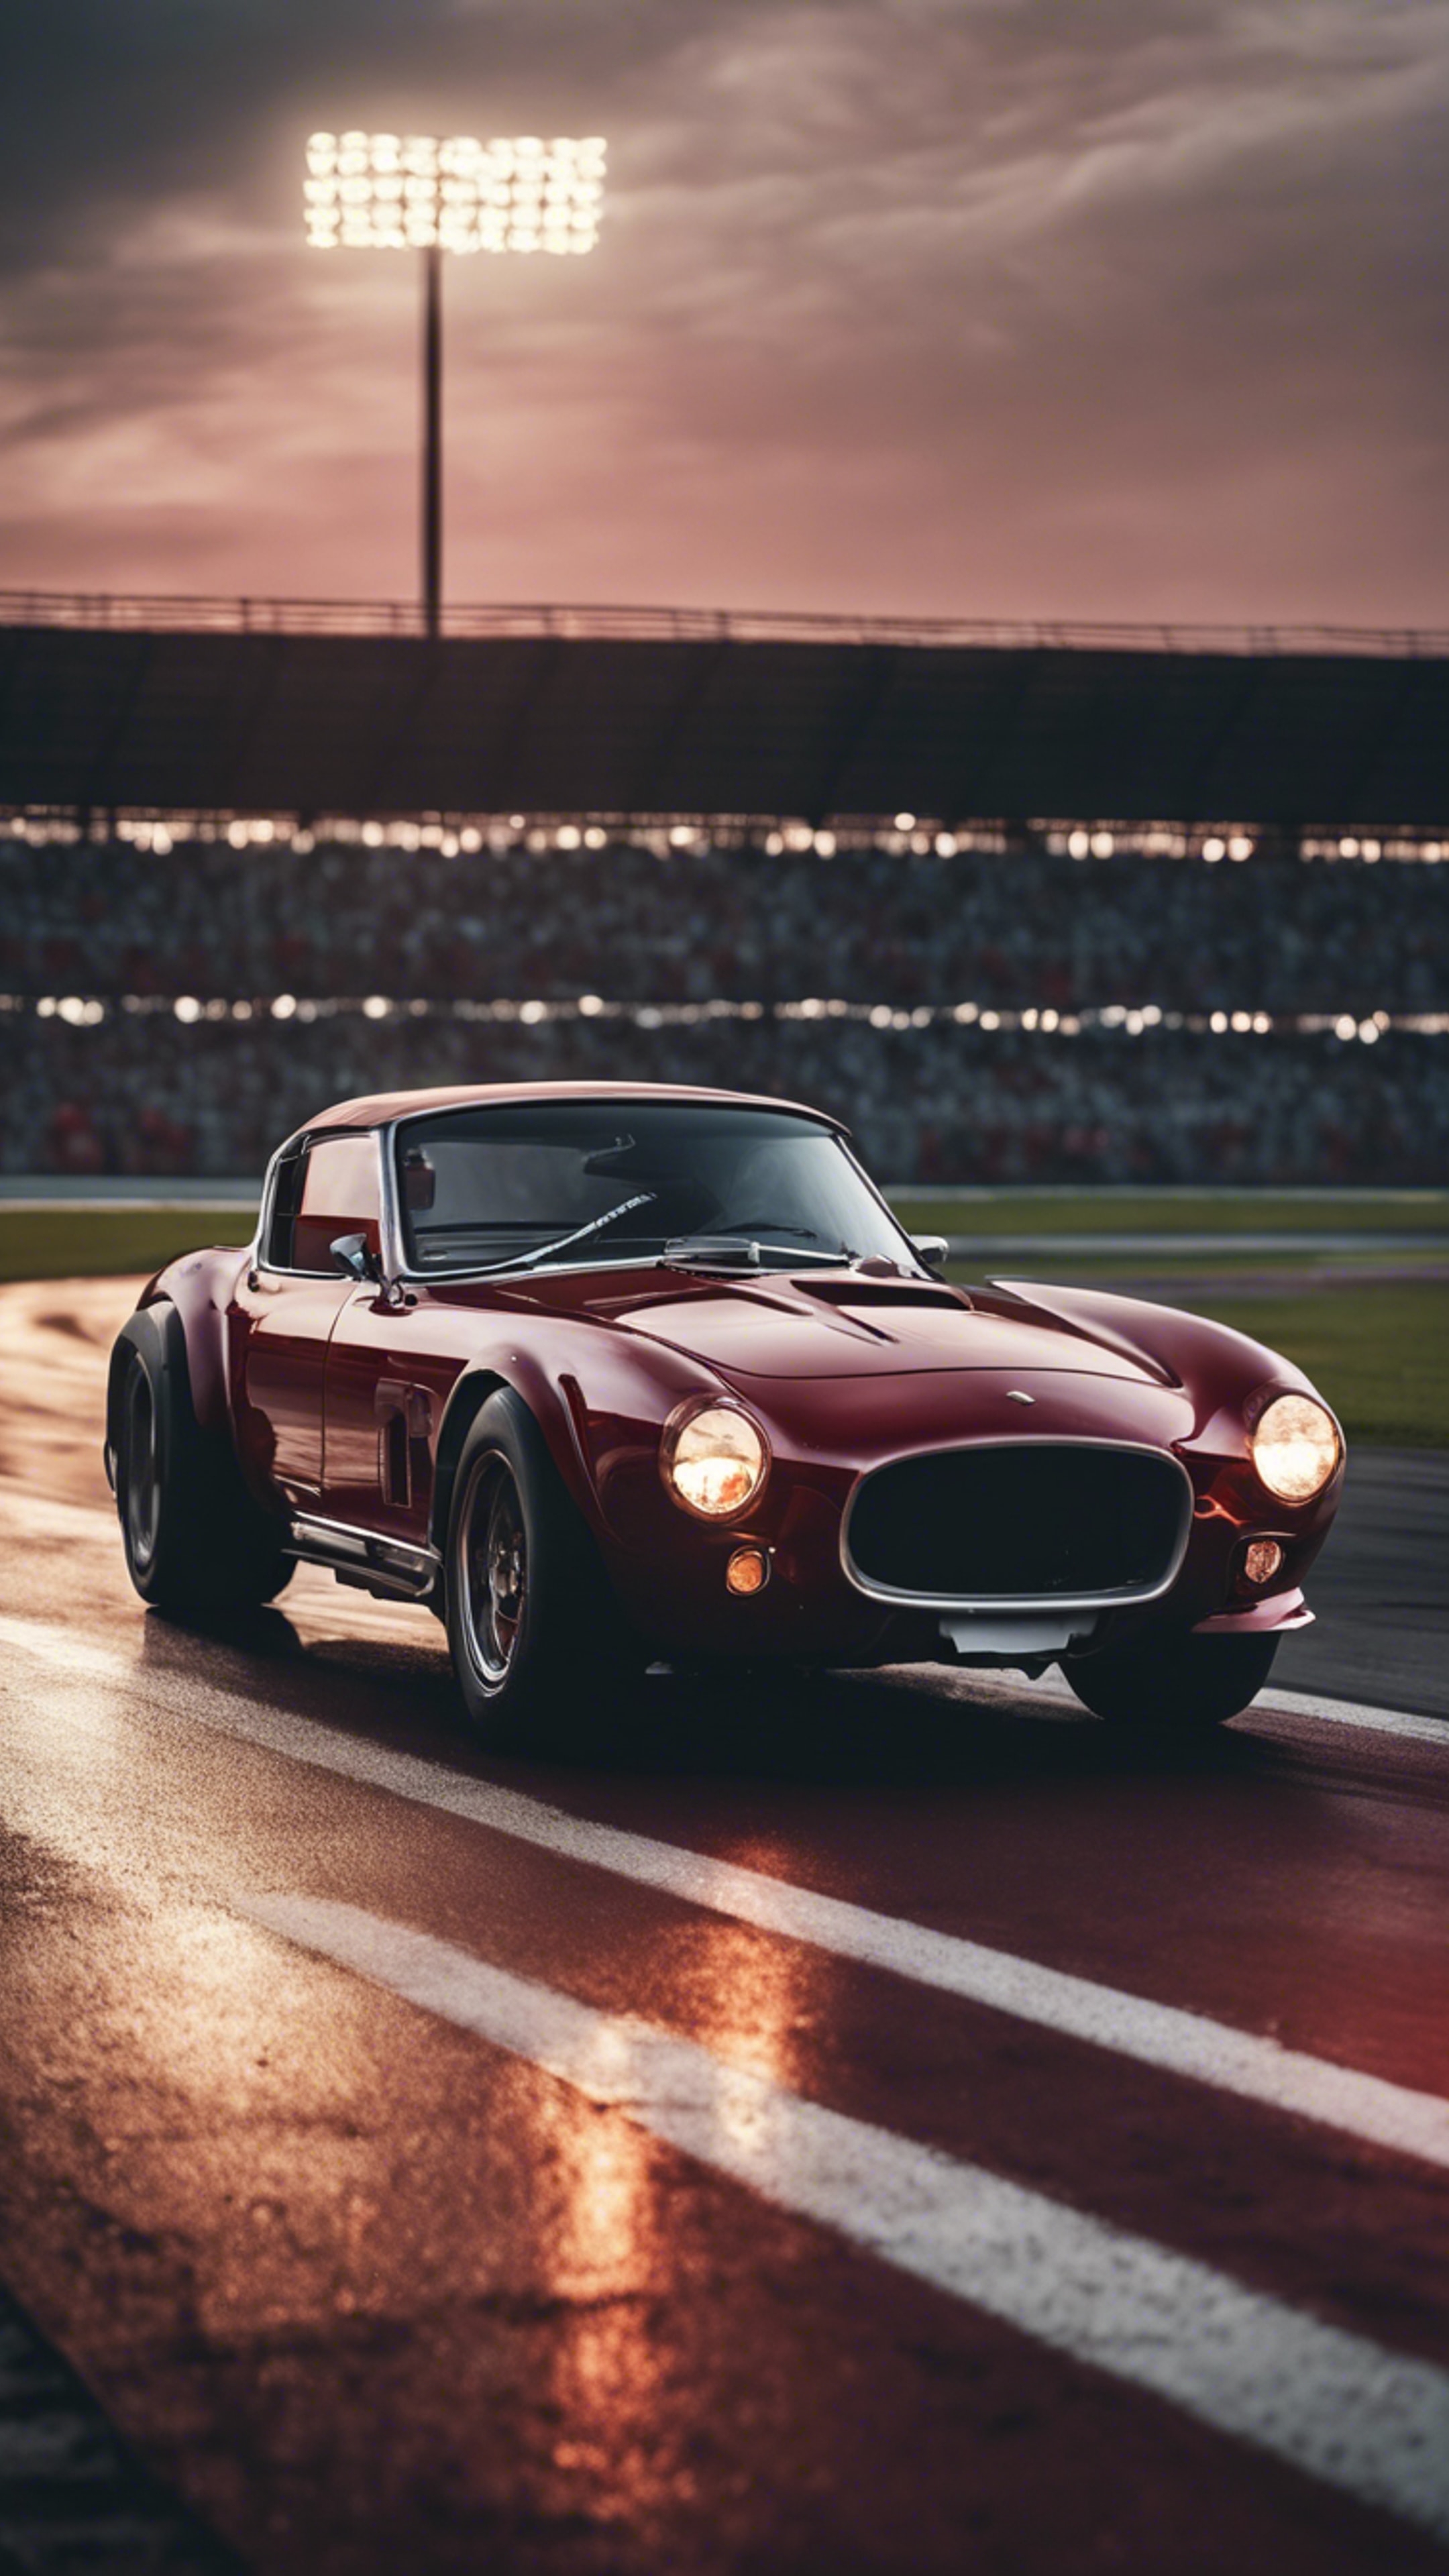 A richly toned dark red sports car racing on a track under the evening sky. Fondo de pantalla[f7c86e5103c94fca80ae]